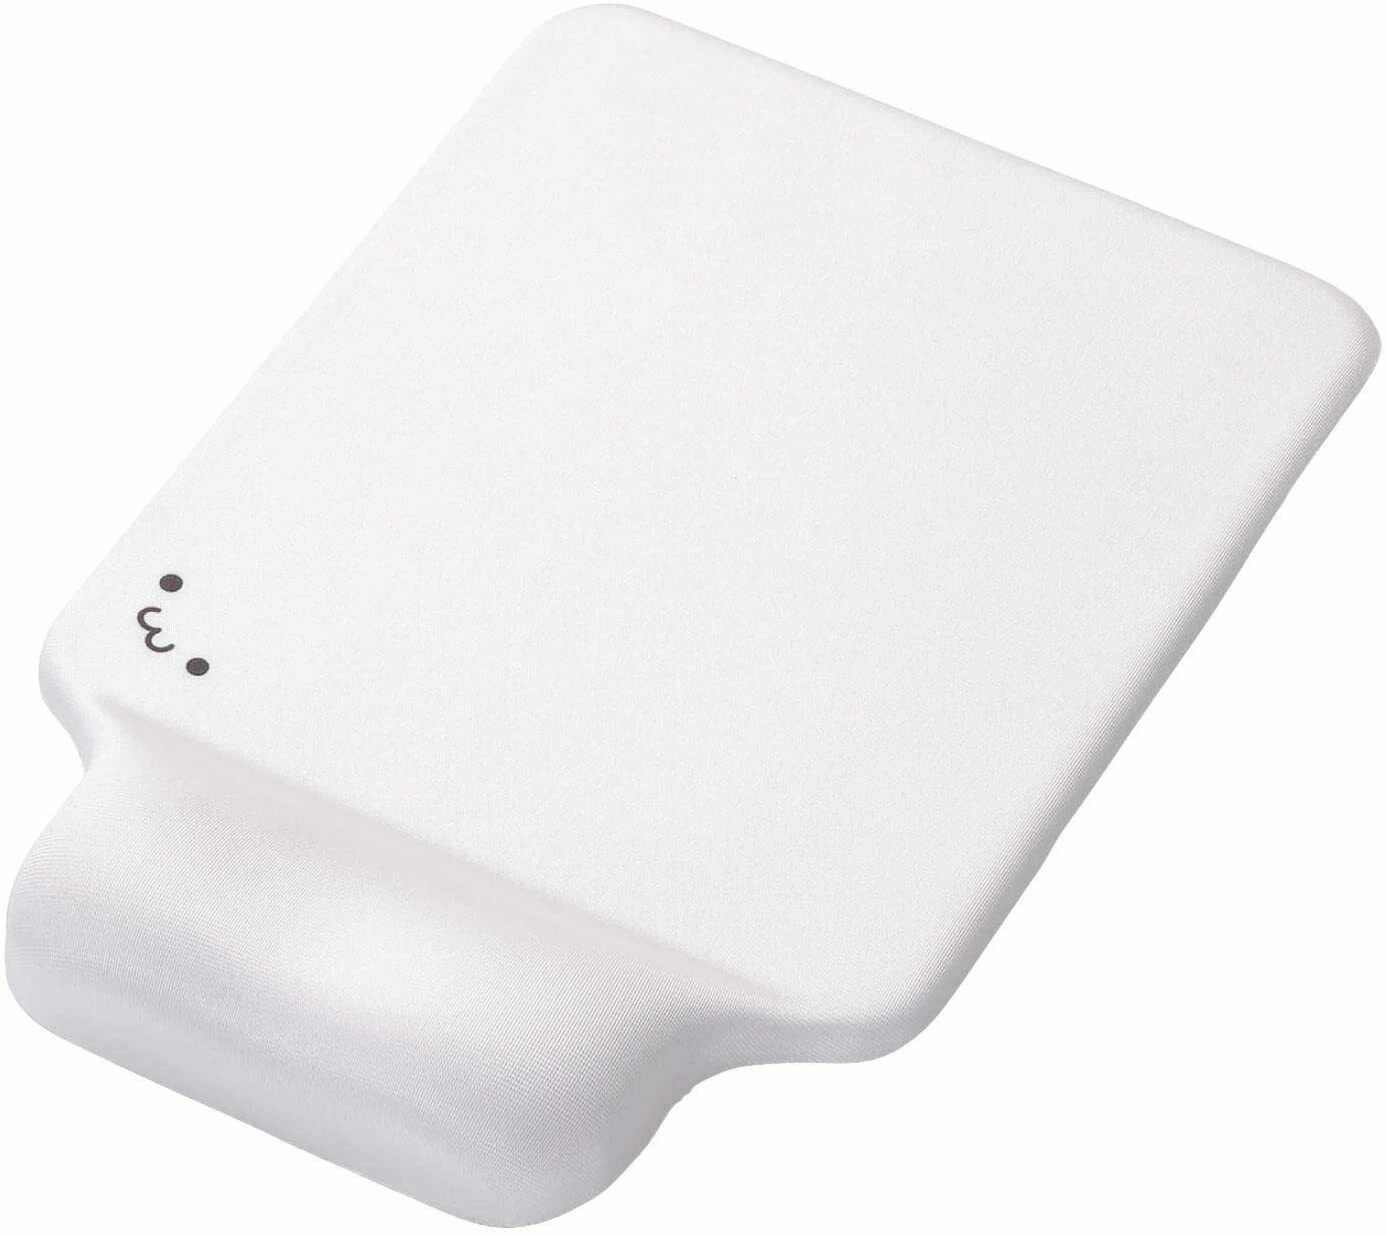 ELECOM mouse pad wrist rest gel material sticking to desk white MP-GELWH